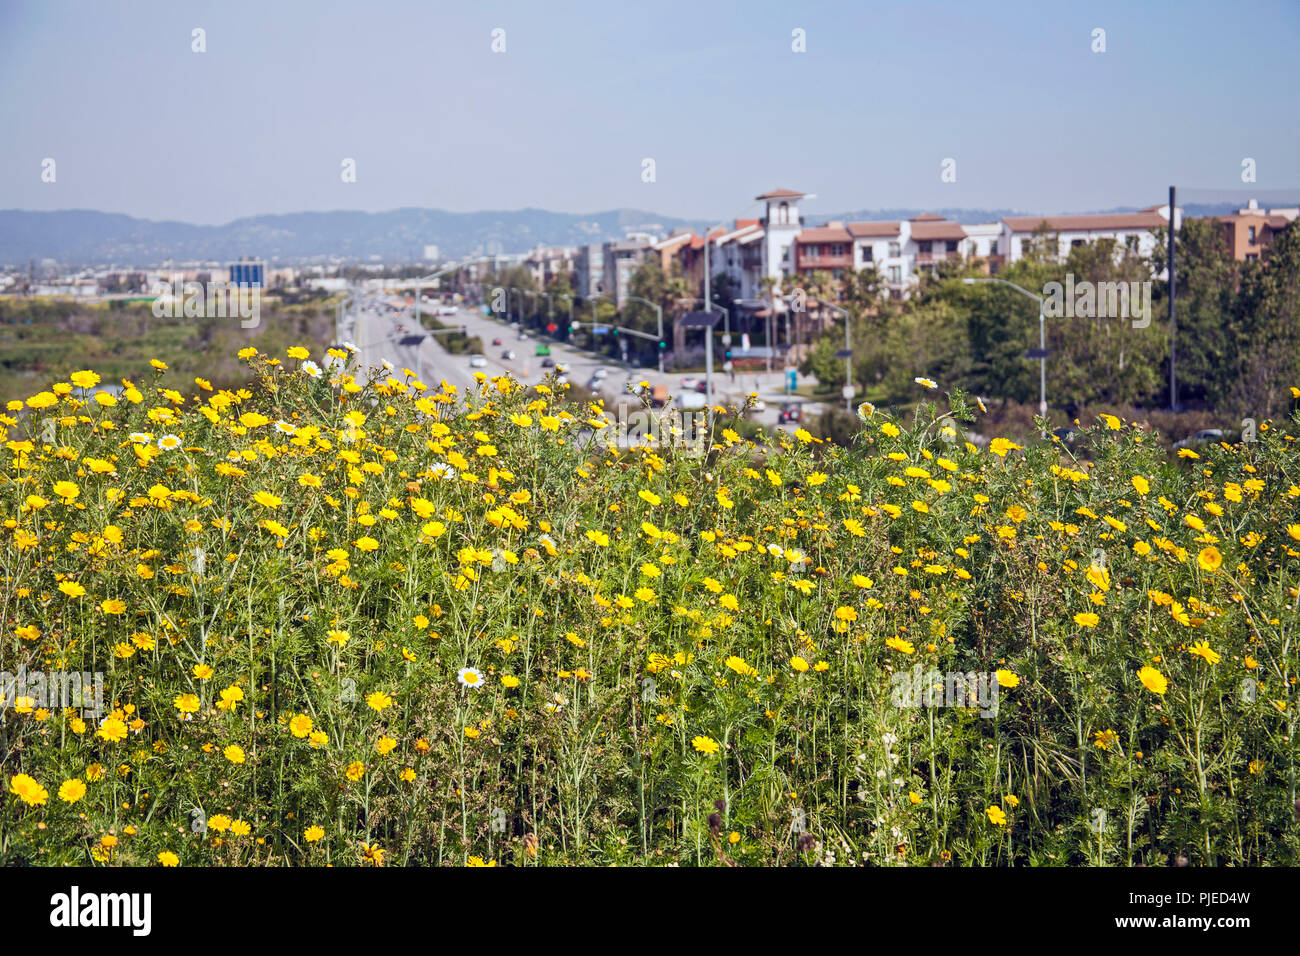 Ballona Wetlands and Playa Vista development, Los Angeles, California Stock Photo